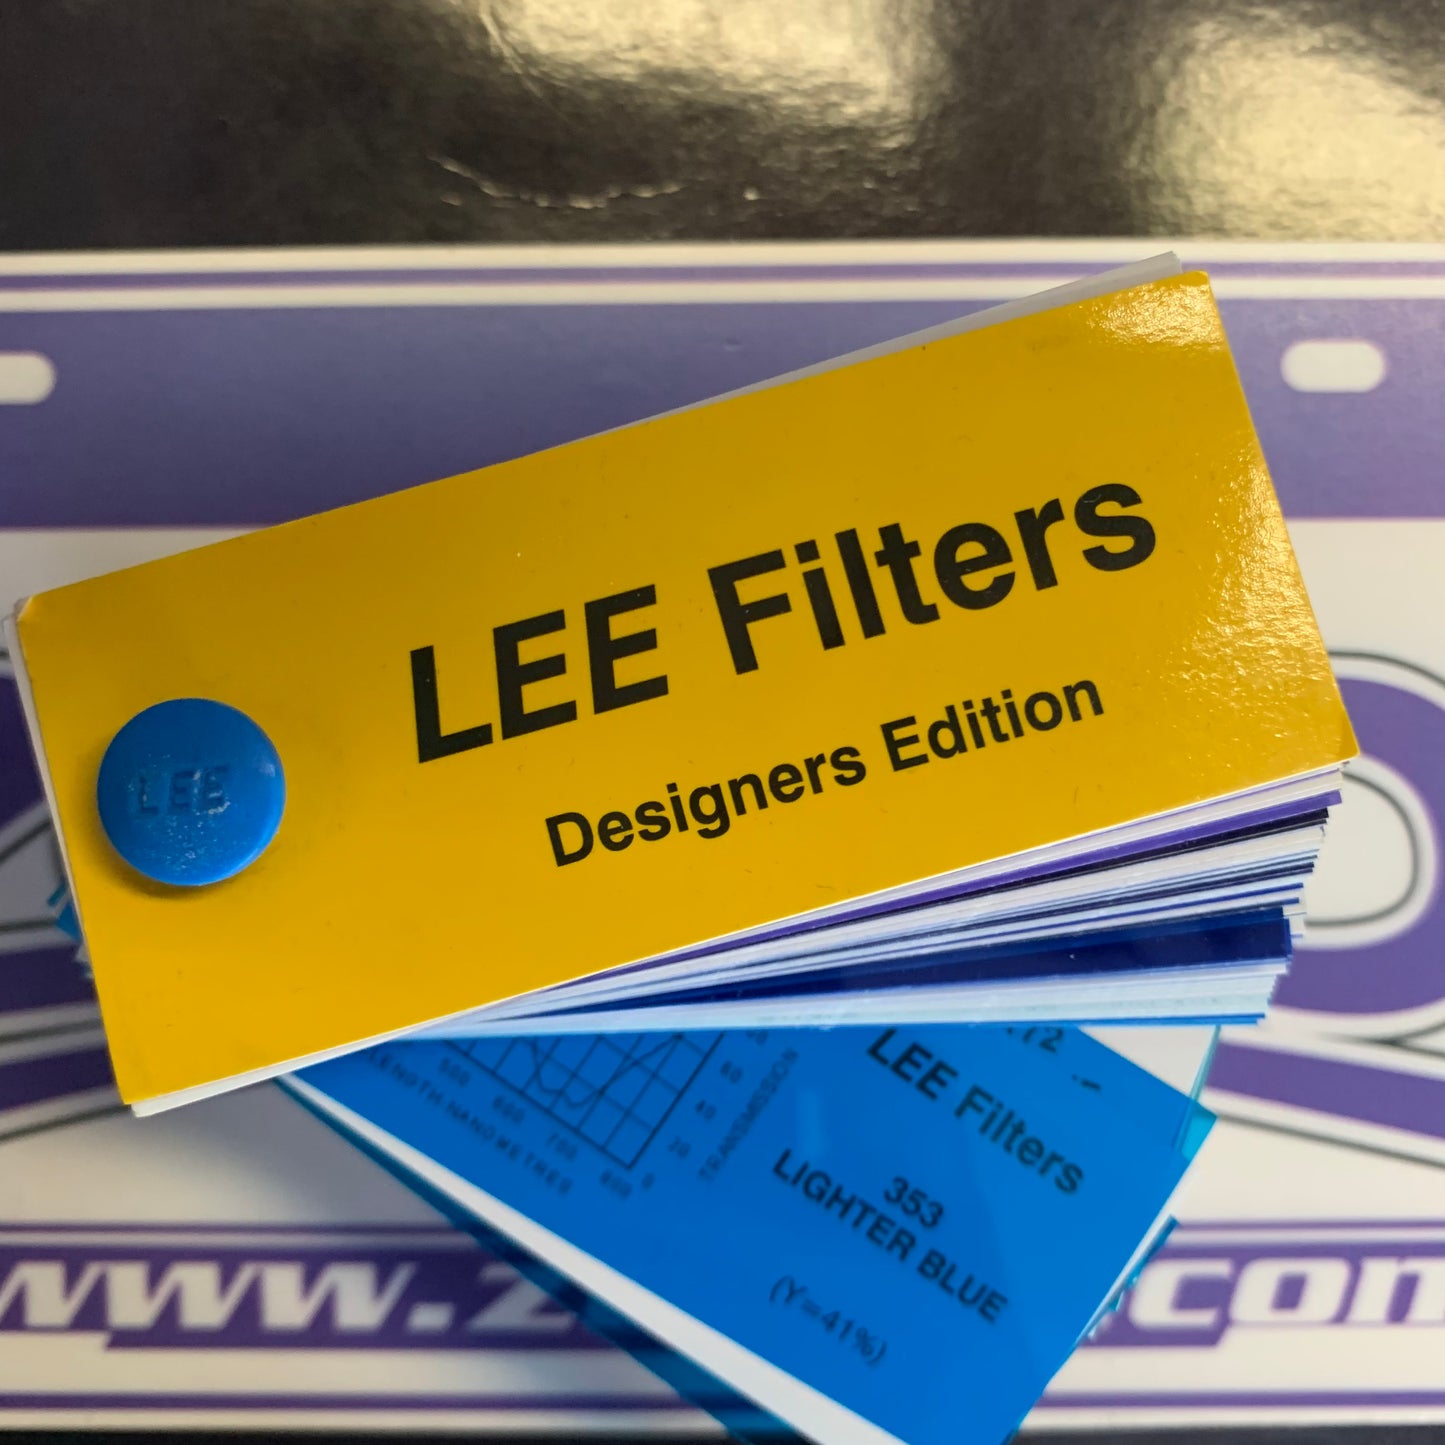 Lee Filters Designers Edition Swatchbook